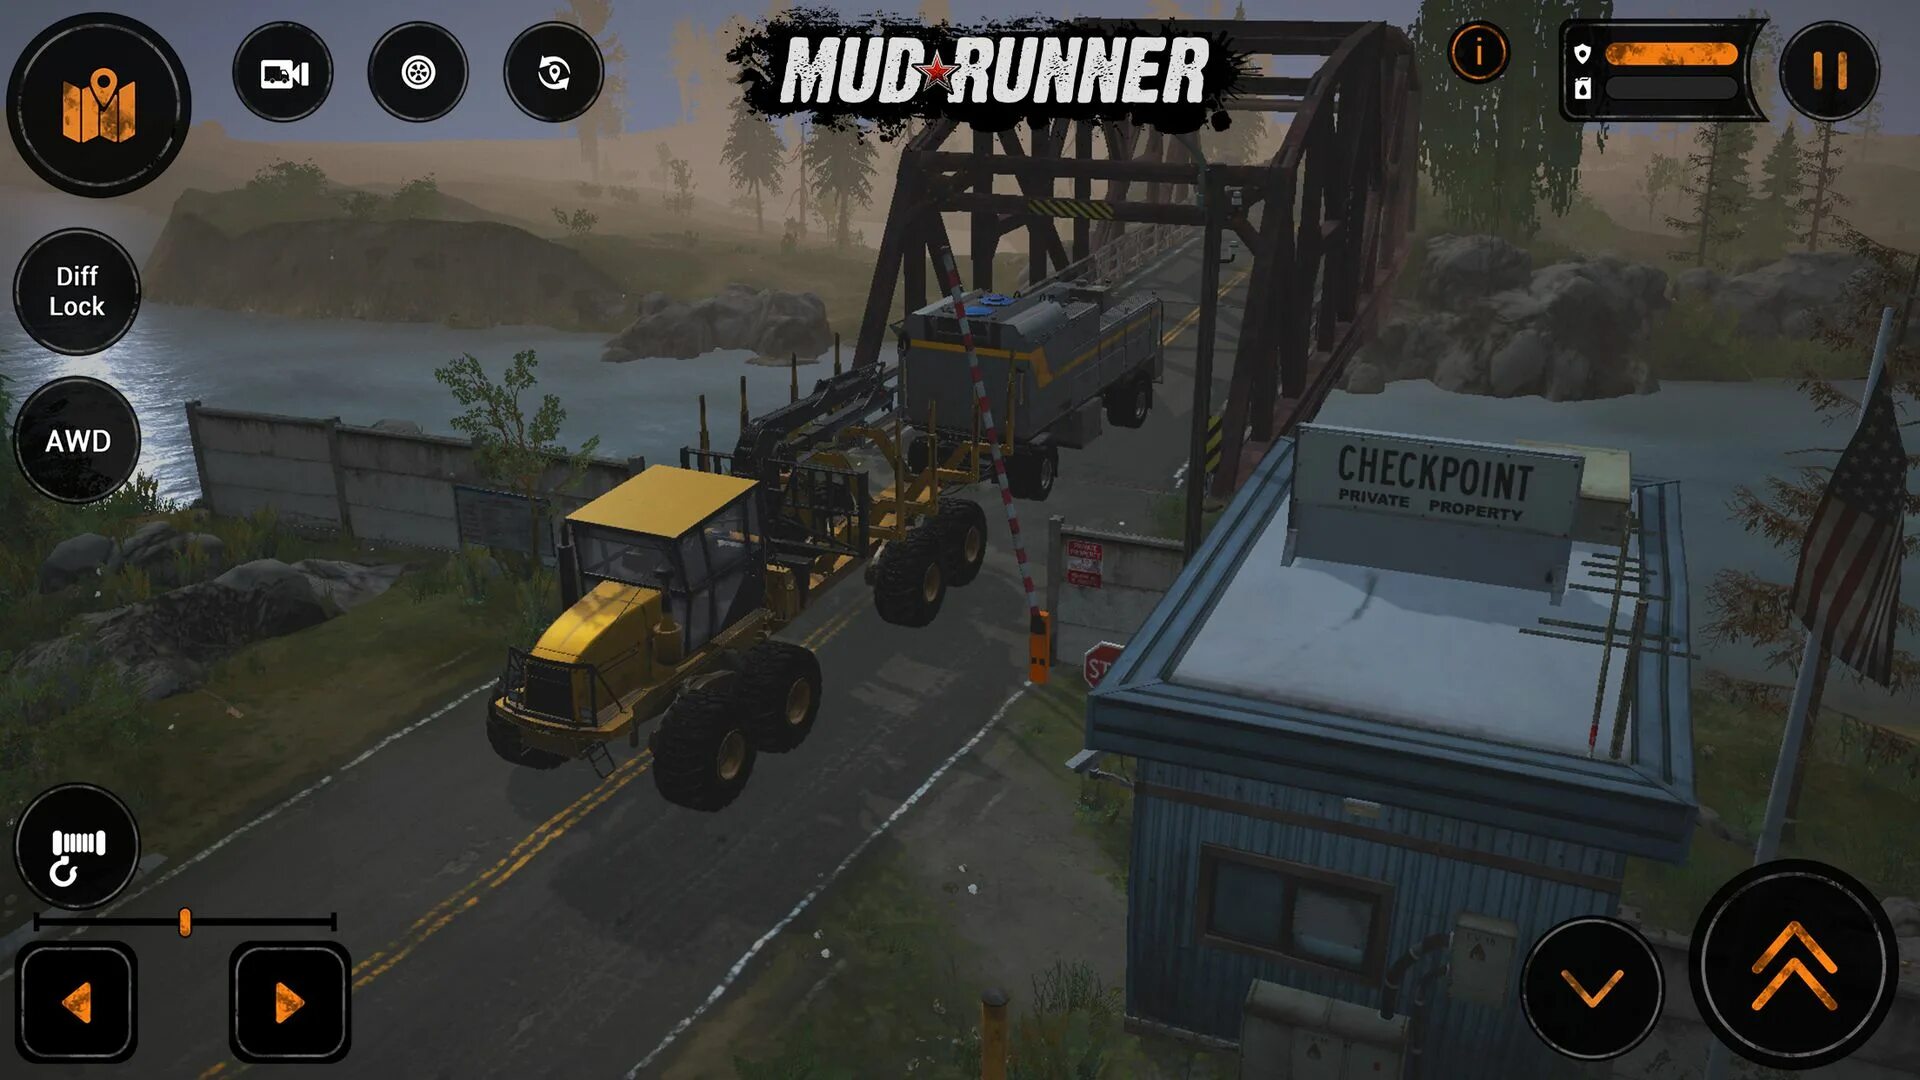 Mobile games mod. Мод раннер мобайл. Mud Runner игра. Mud Runner на андроид. Взломанная игра Mud Runner.